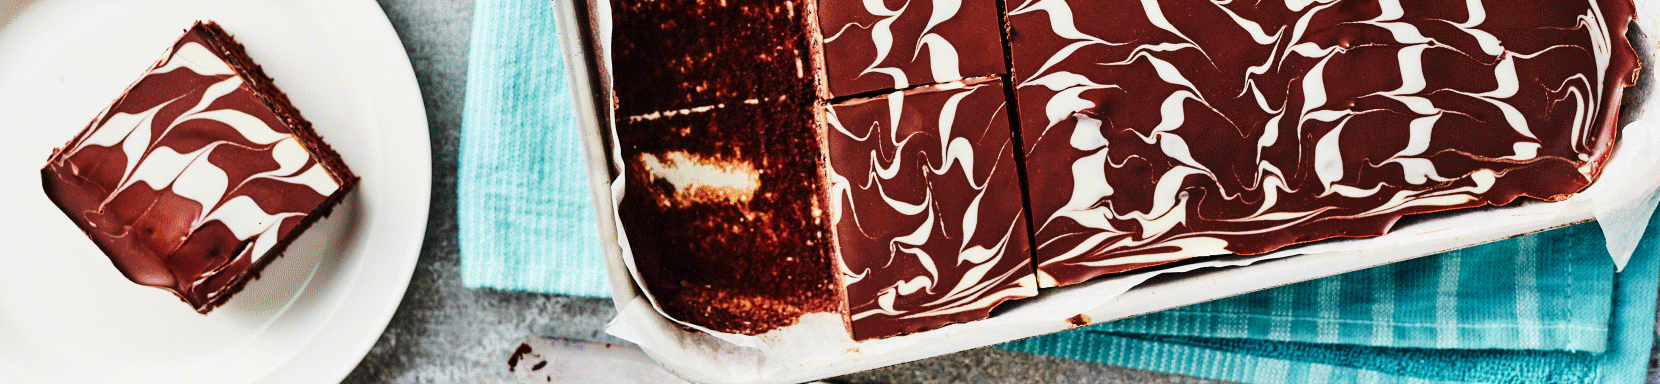 Chocolate Traybake